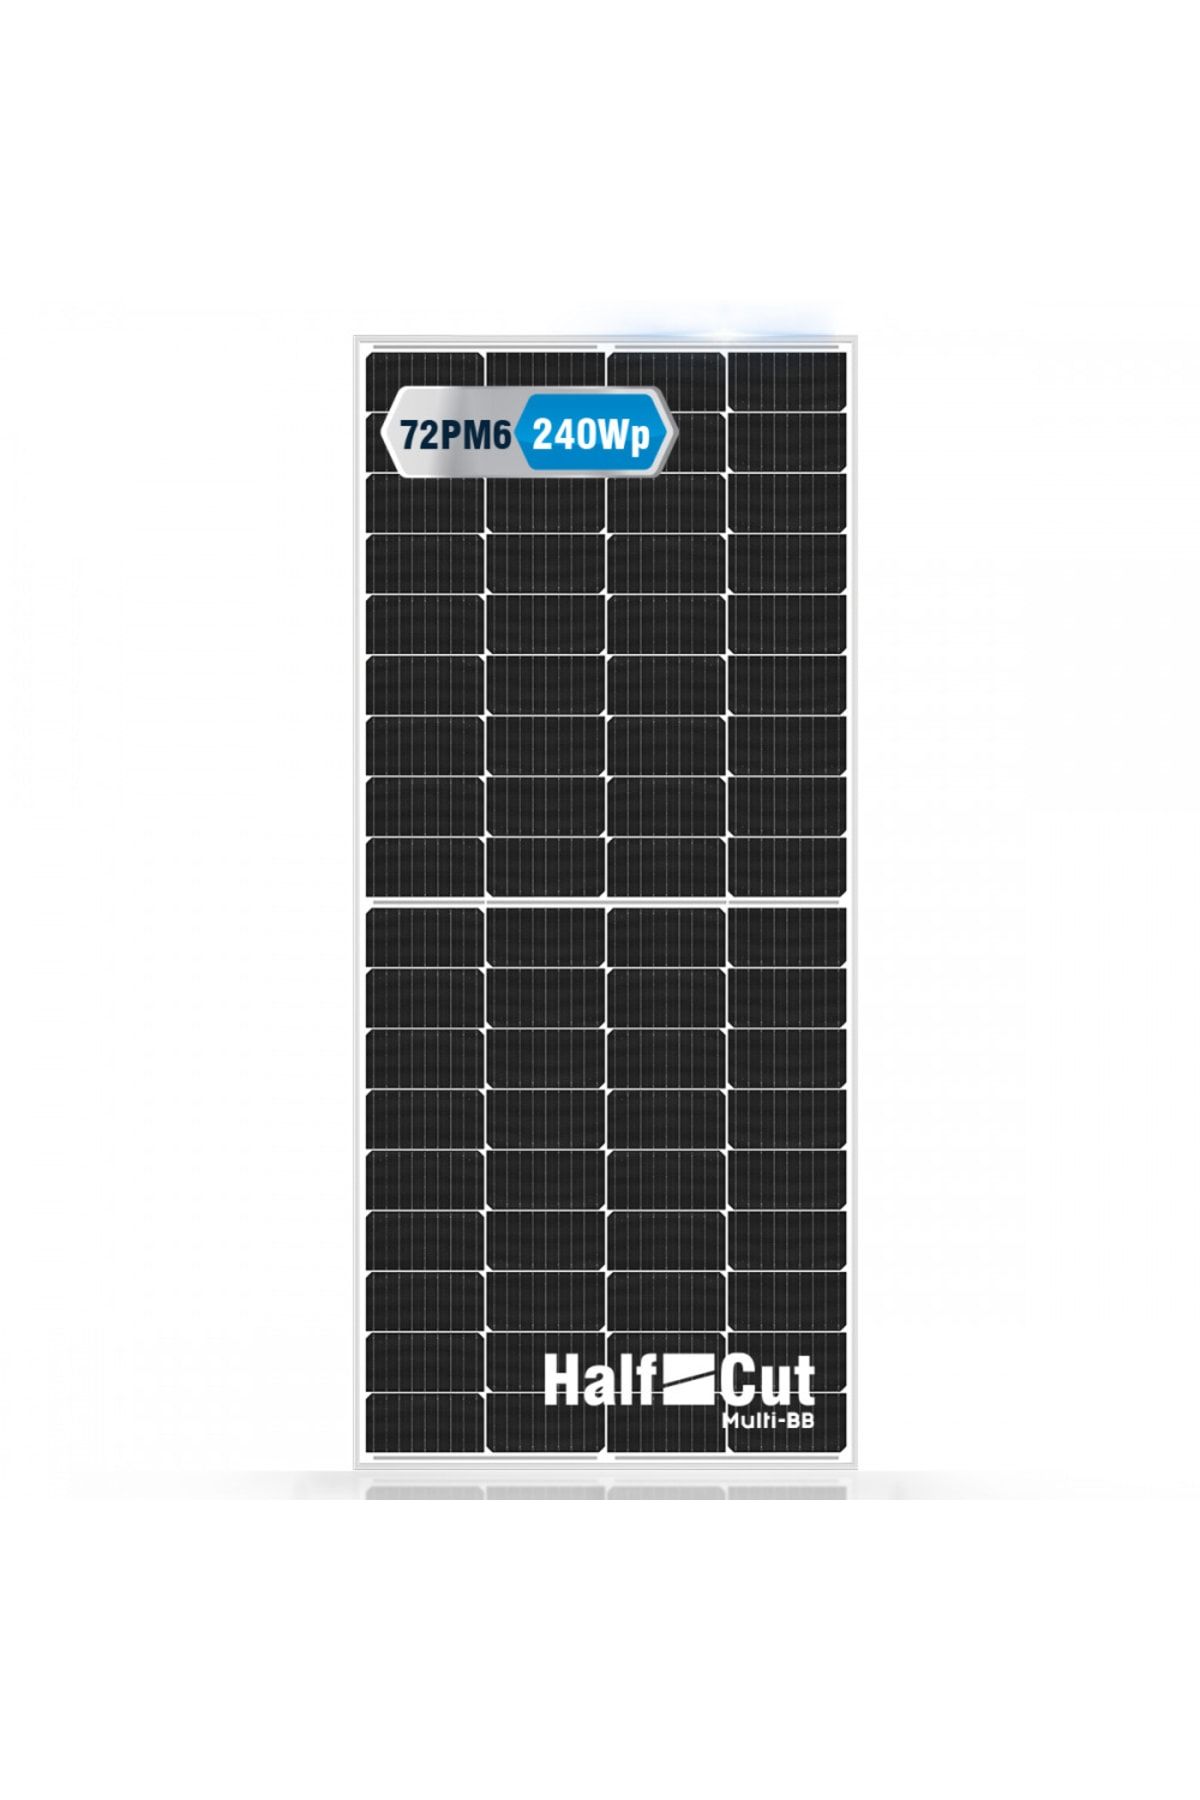 suneng panel Suneng 240 W Watt 72pm Half Cut Multibusbar Güneş Paneli Solar Panel